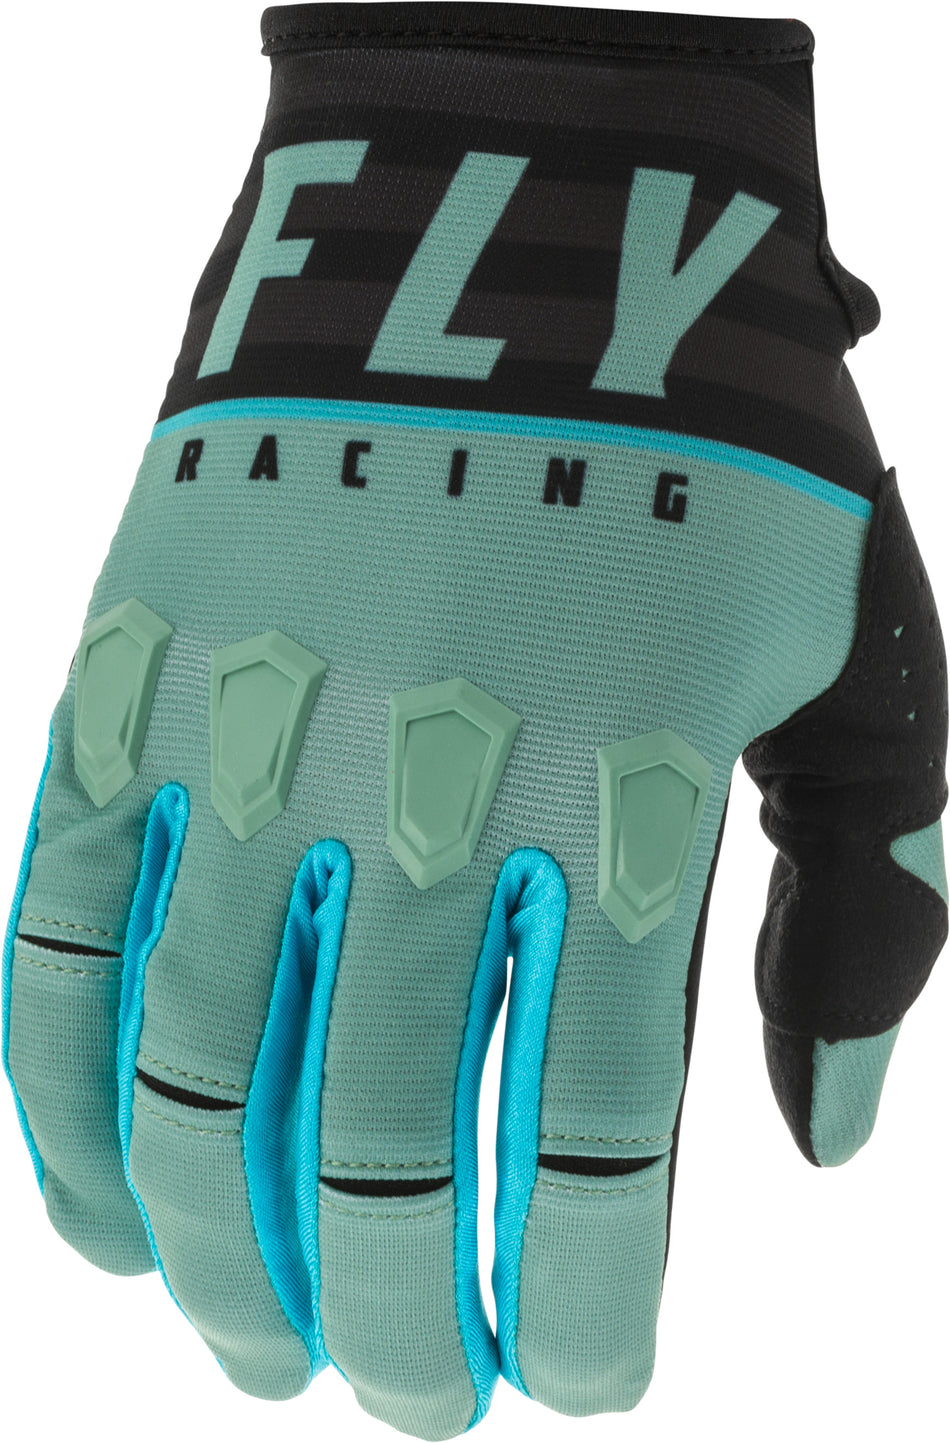 FLY RACING Kinetic K120 Gloves Sage Green/Black Sz 10 373-41610